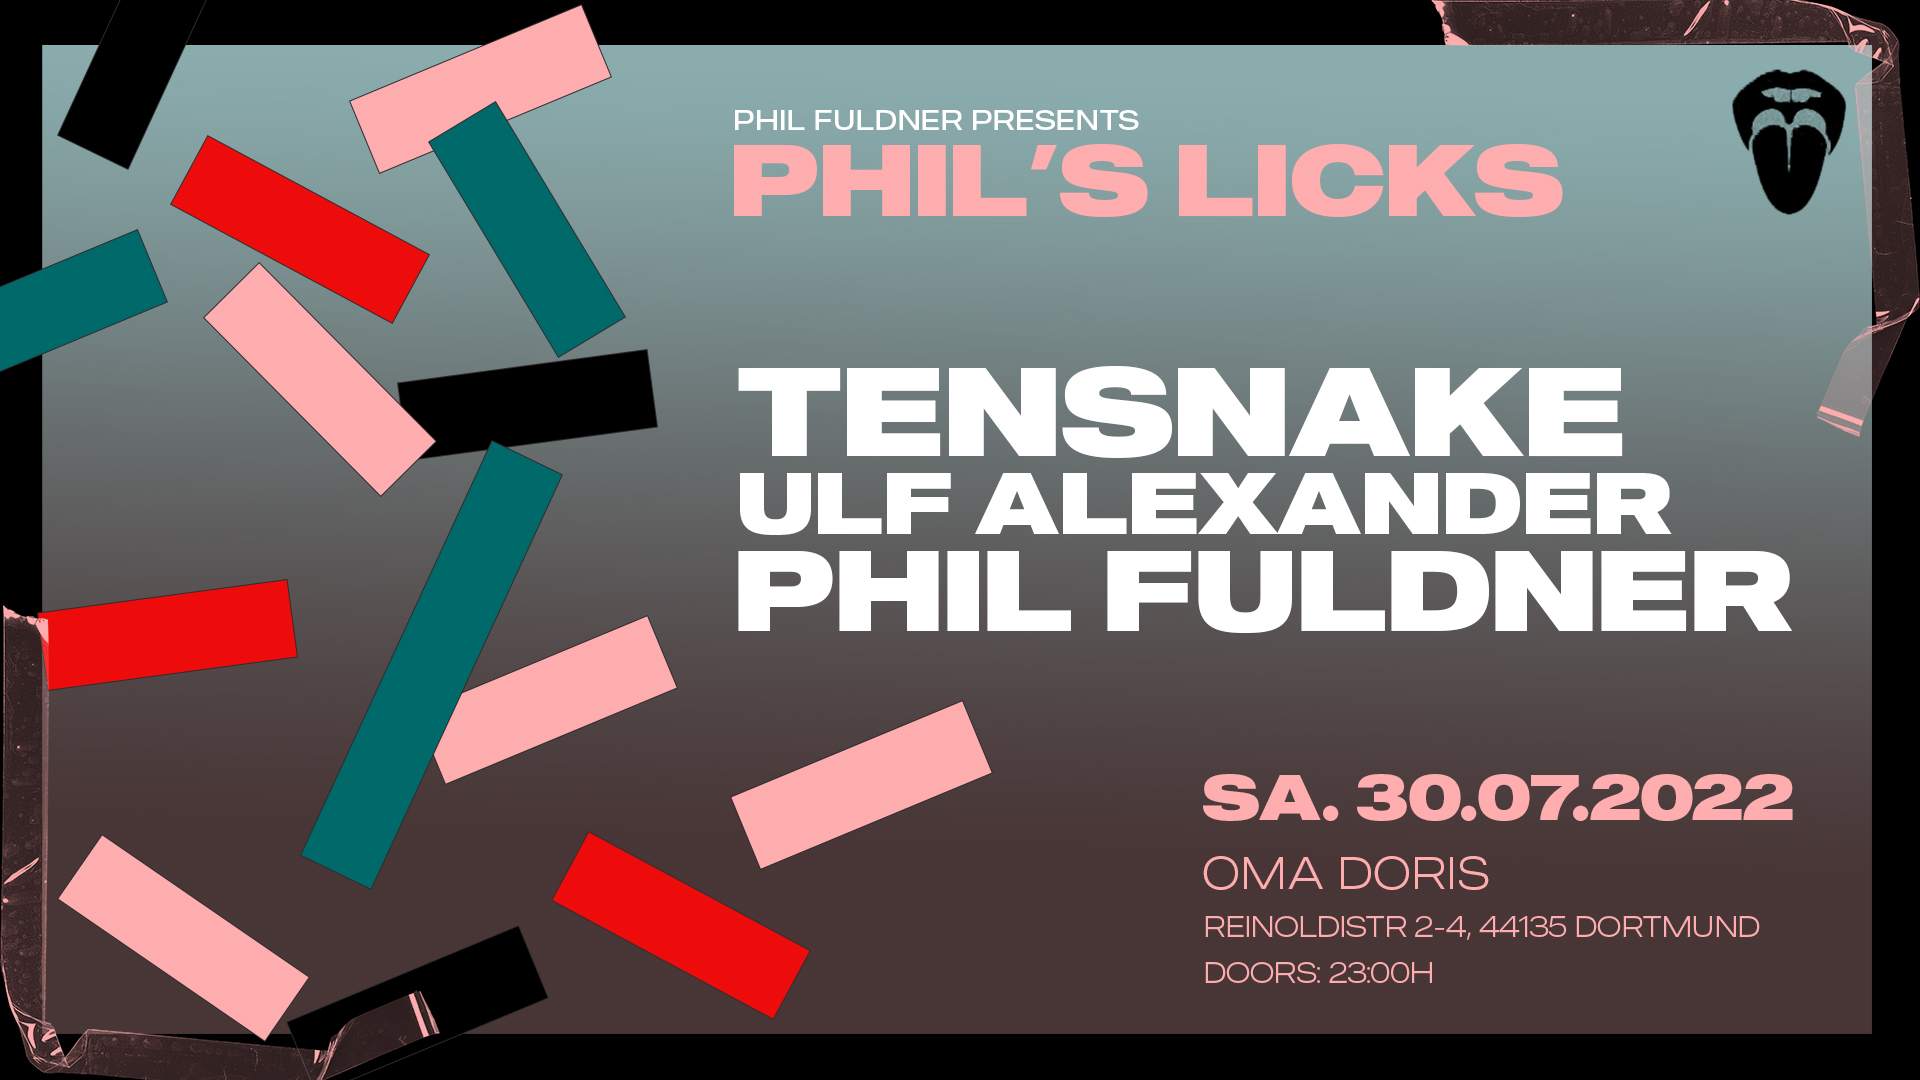 Phil's Licks with Tensnake, Phil Fuldner & Ulf Alexander - Página frontal